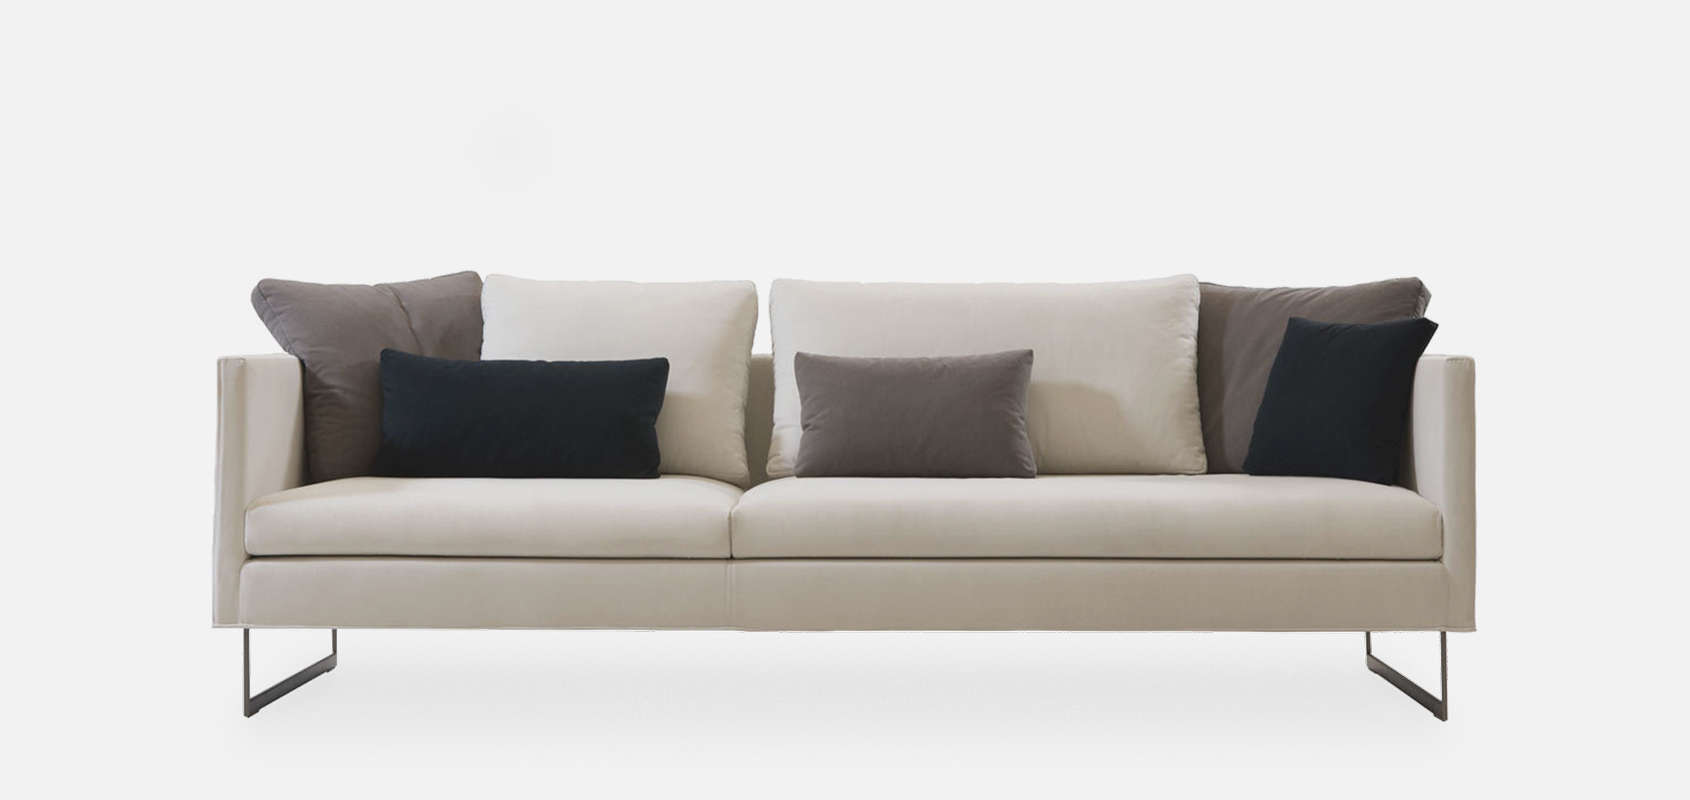 Deck Upholstered Sofa